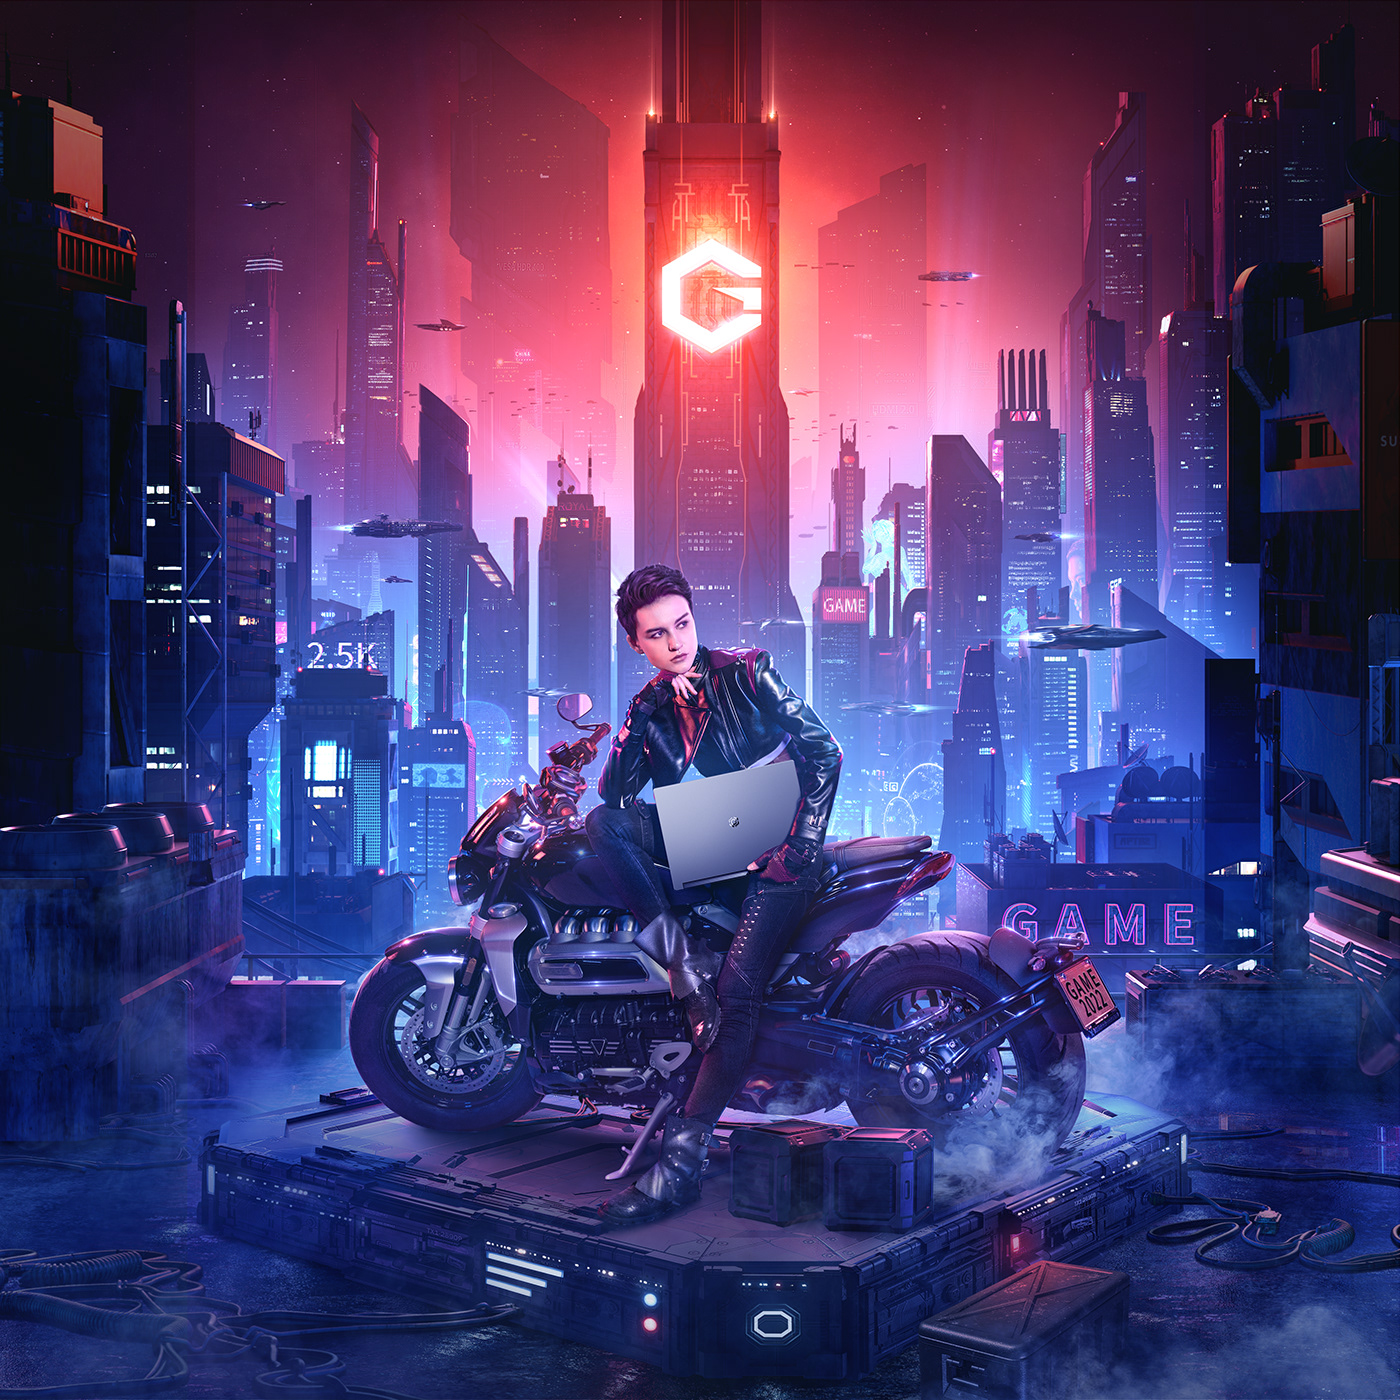 Cyberpunk triumph motorcycle xiaomi Laptop city future modern 3ds max game